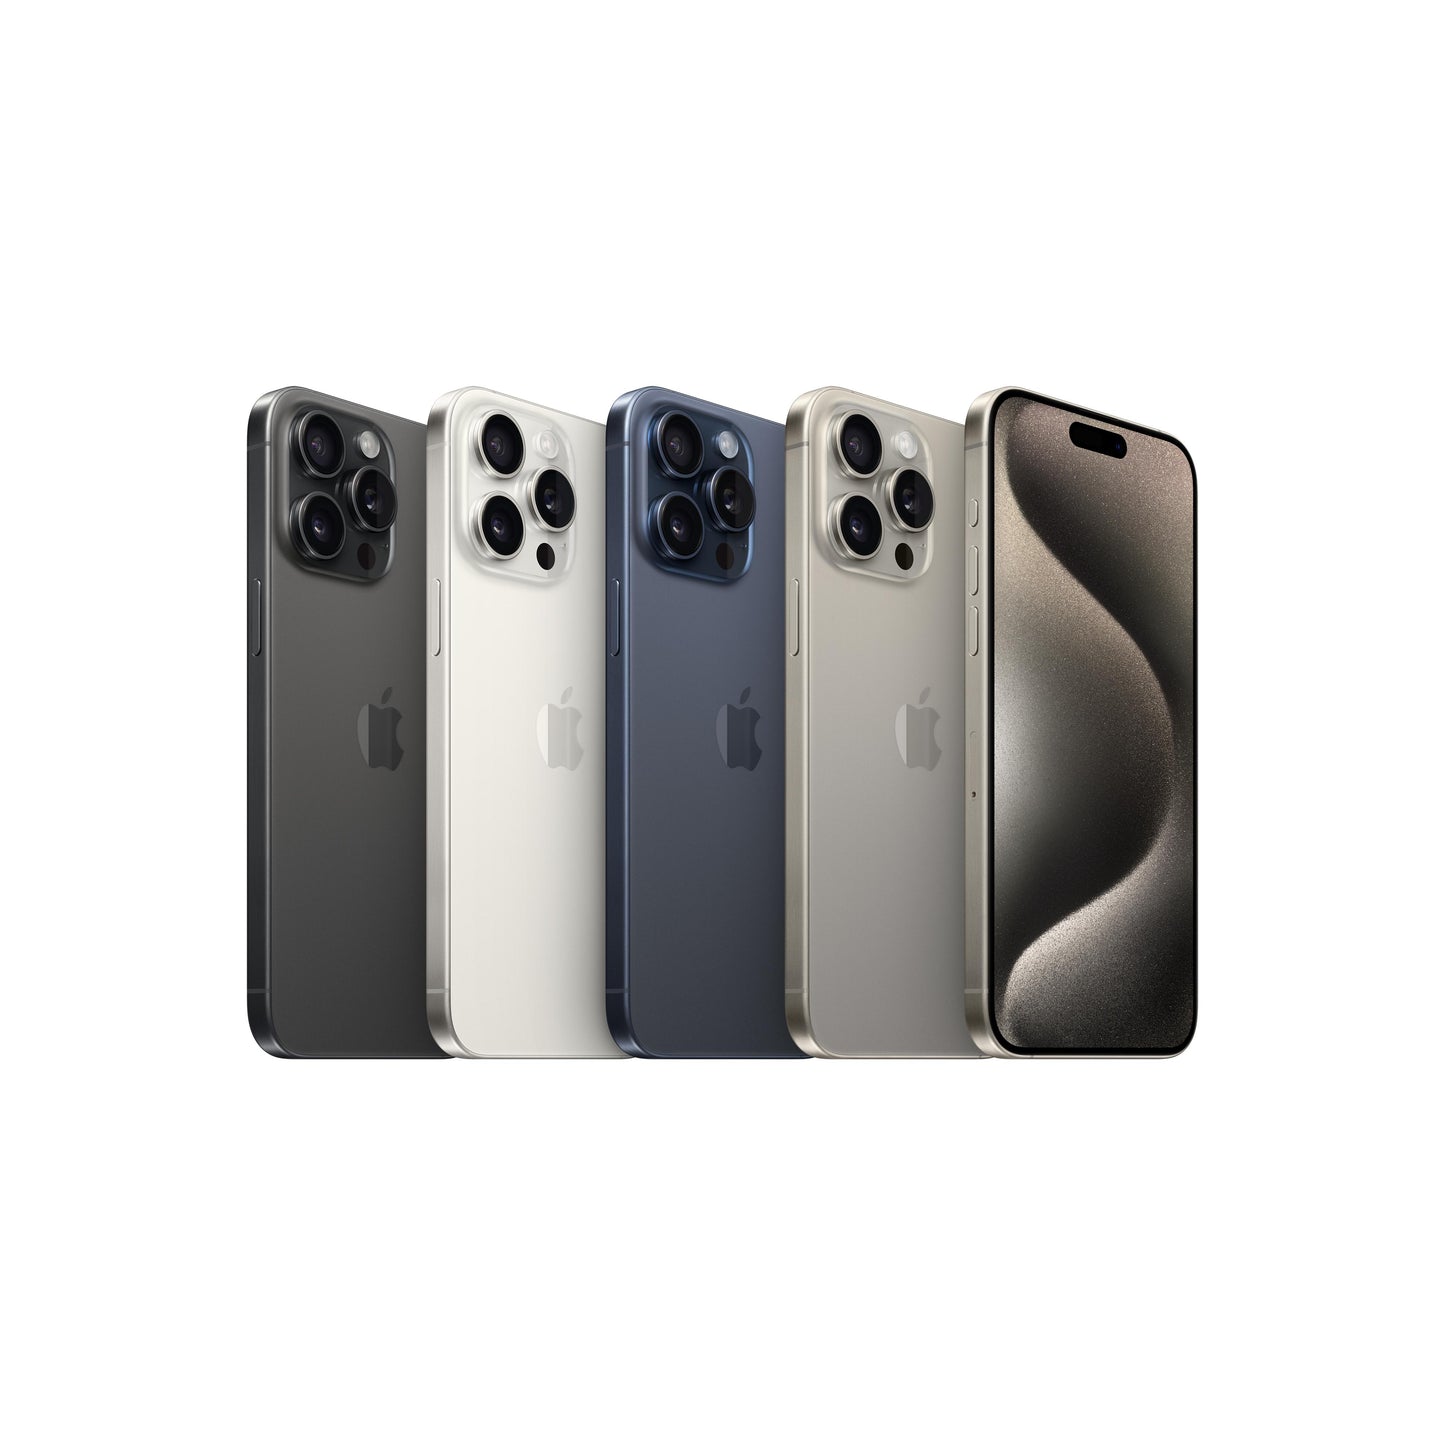 iPhone Pro Max in White Titanium, 1TB Storage. EMI available |Get best offers for iphone 15 pro Max [variant] White Titanium 1TB.